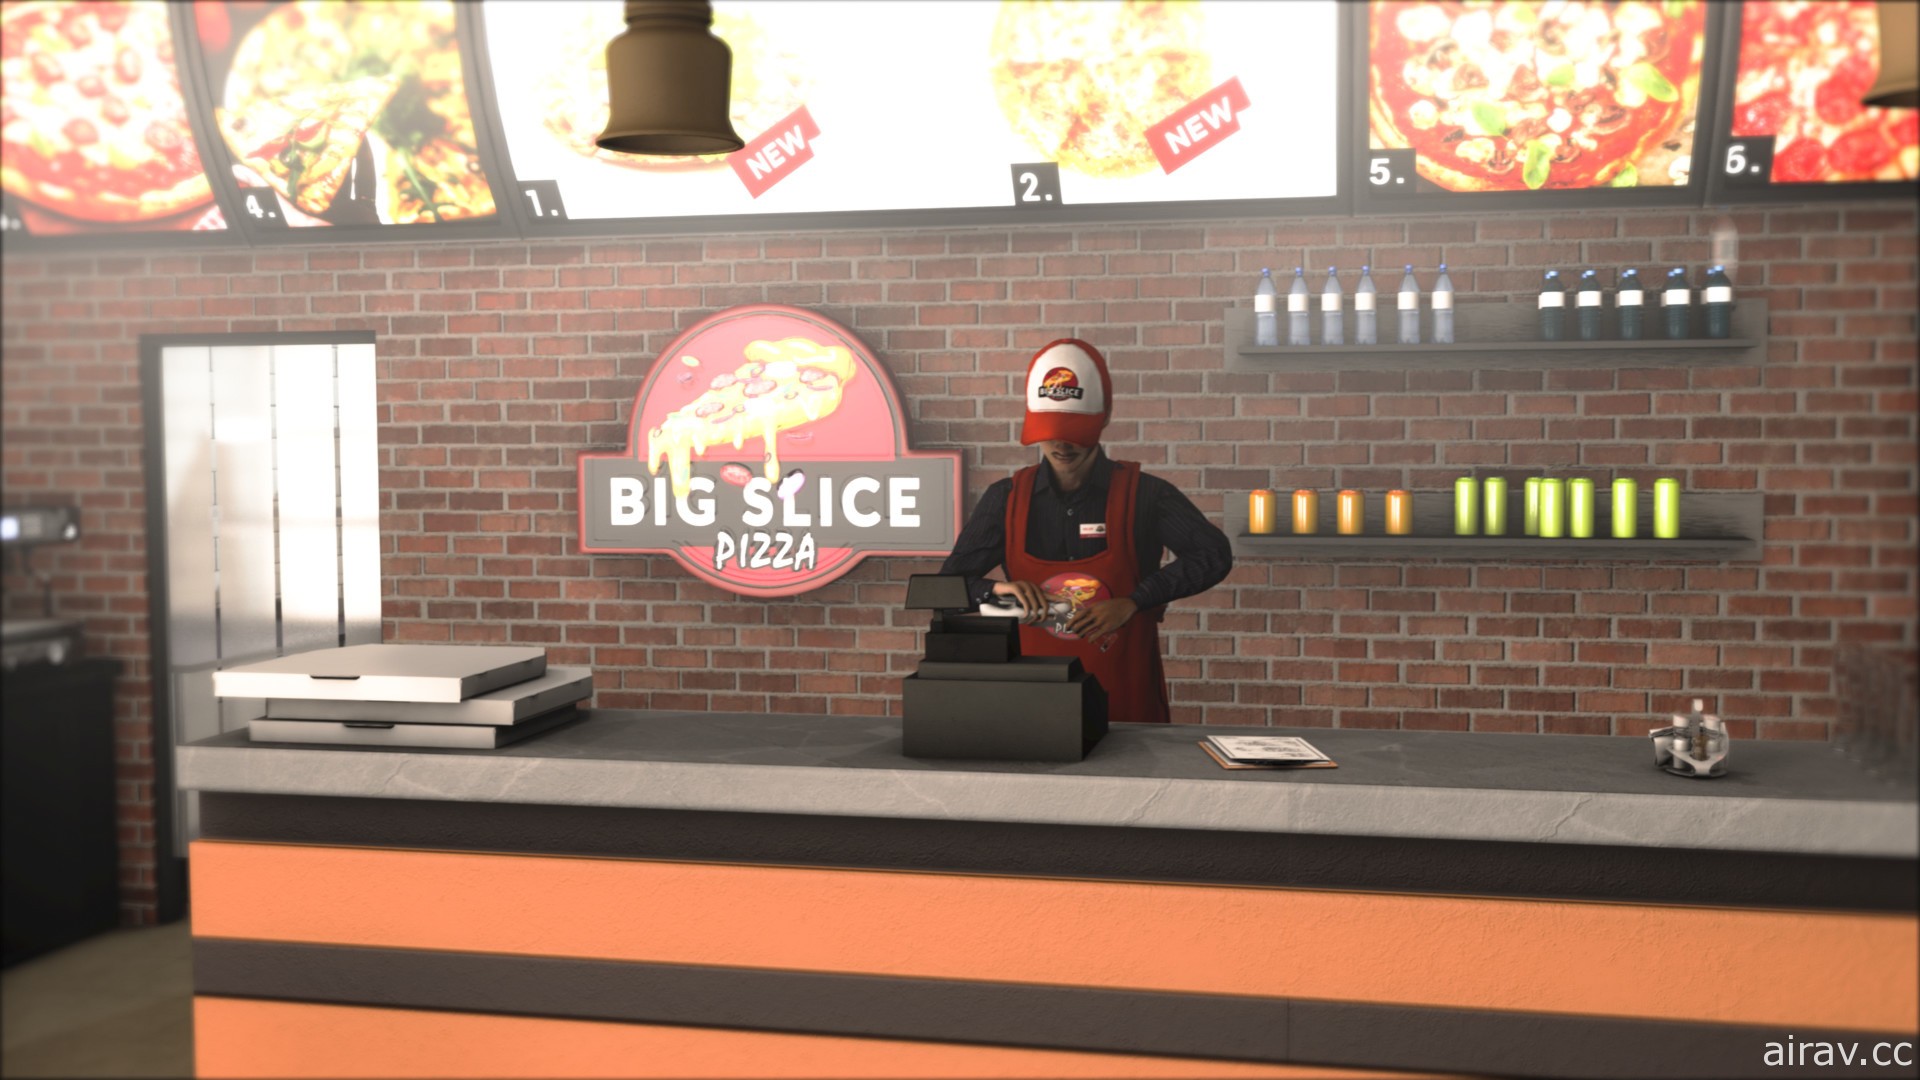 PC 新作《模擬披薩店 Pizza Simulator》預計 2021 年推出 扮演店經理製作披薩、外送